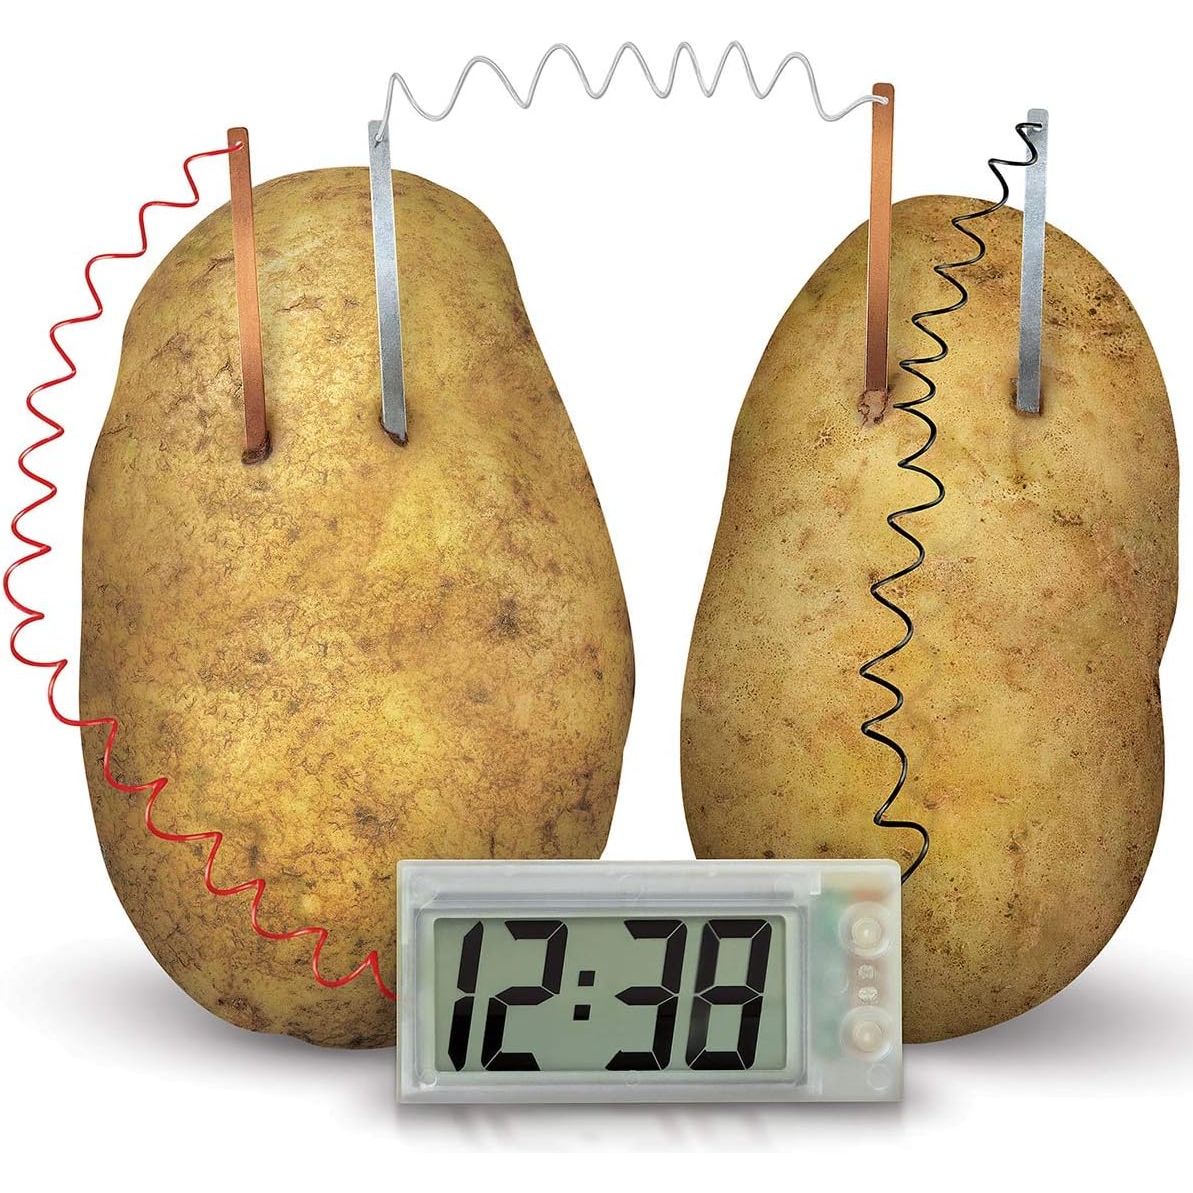 4M Green Science - Potato clock